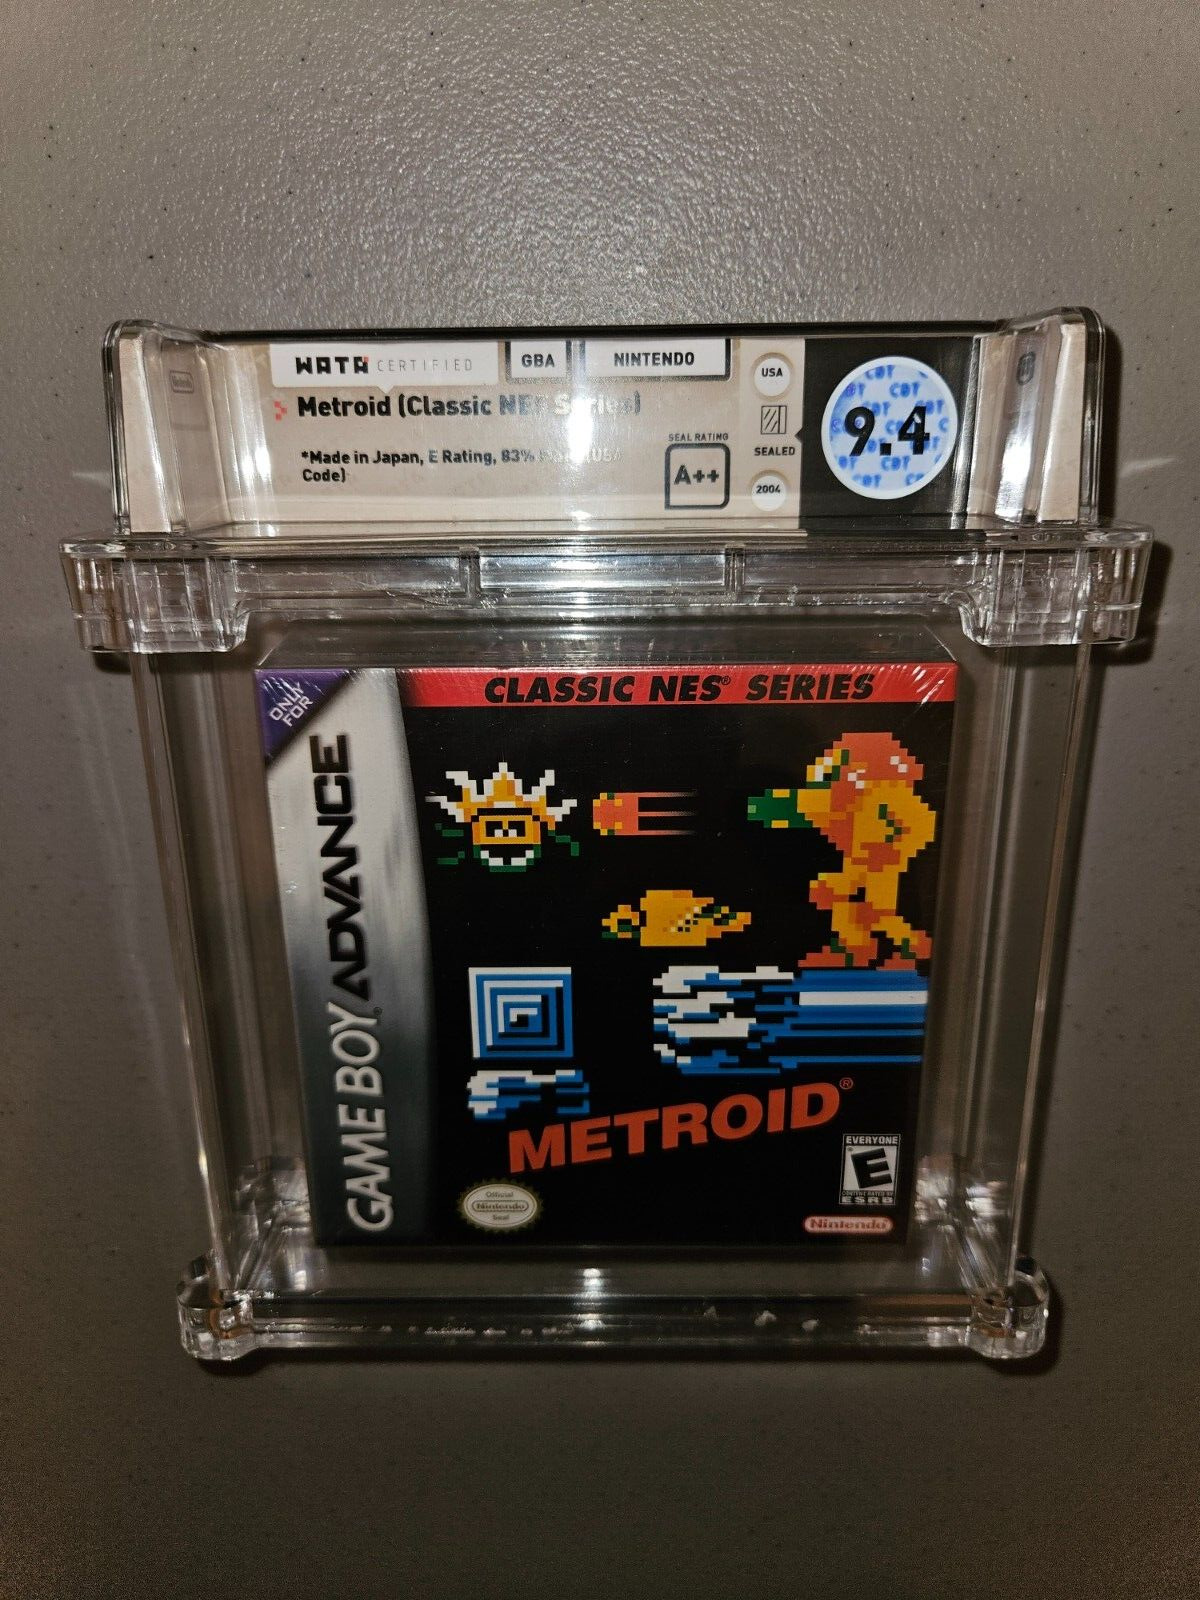 Metroid Classic Nes Series Wata 9.4 A++ Nintendo Gameboy Advance GBA Sealed New